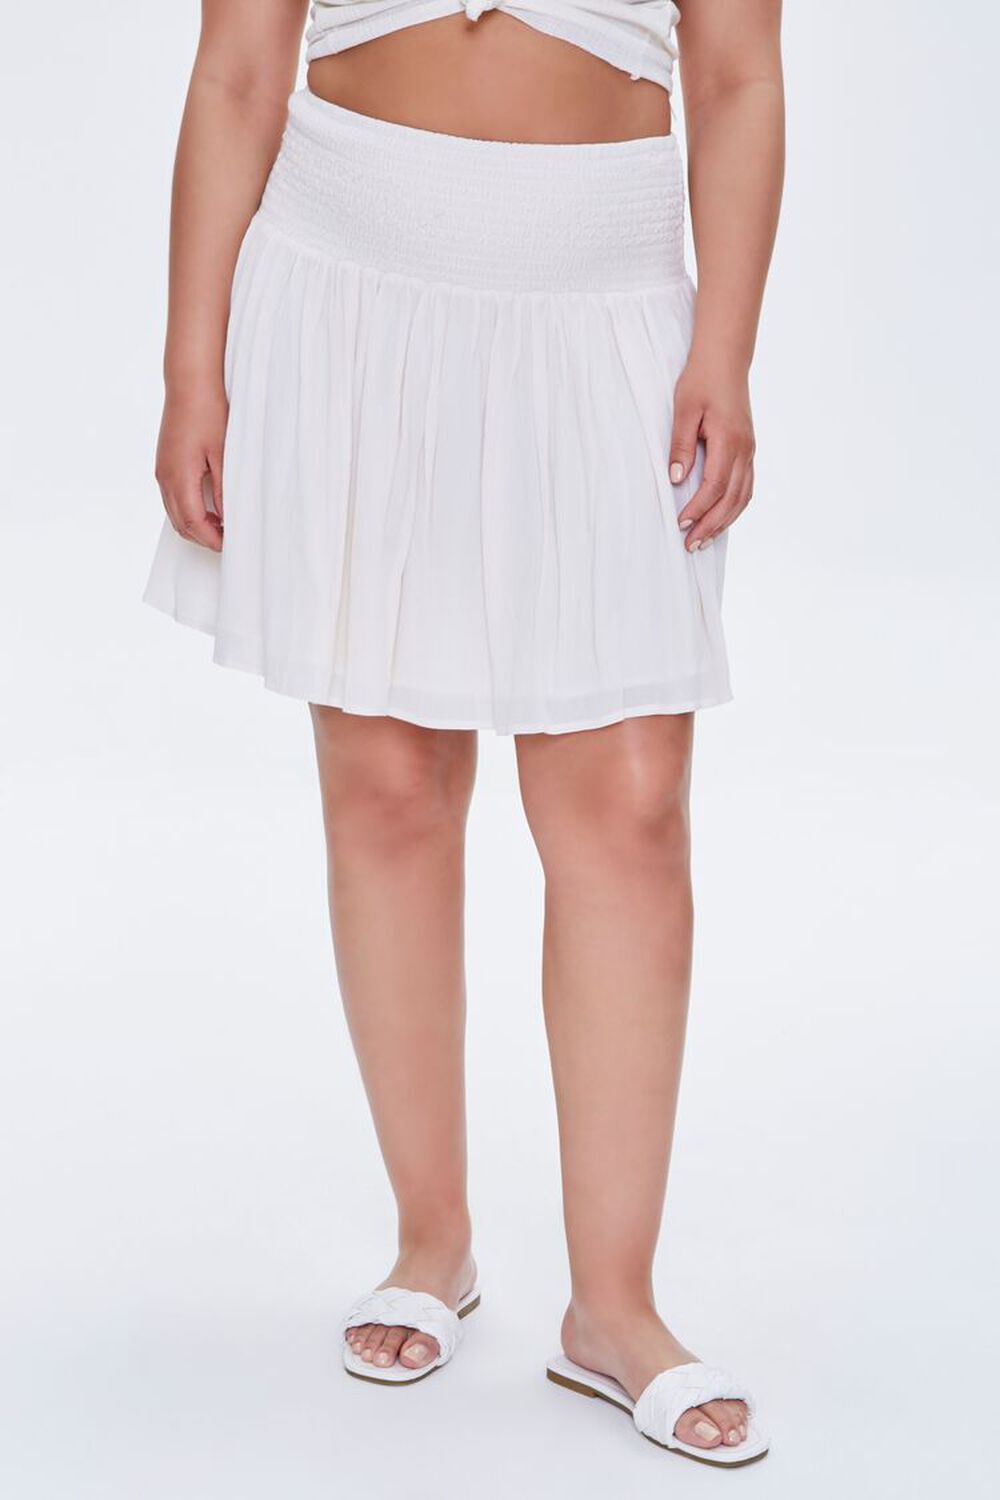 WHITE Plus Size Smocked Mini Skirt, image 2